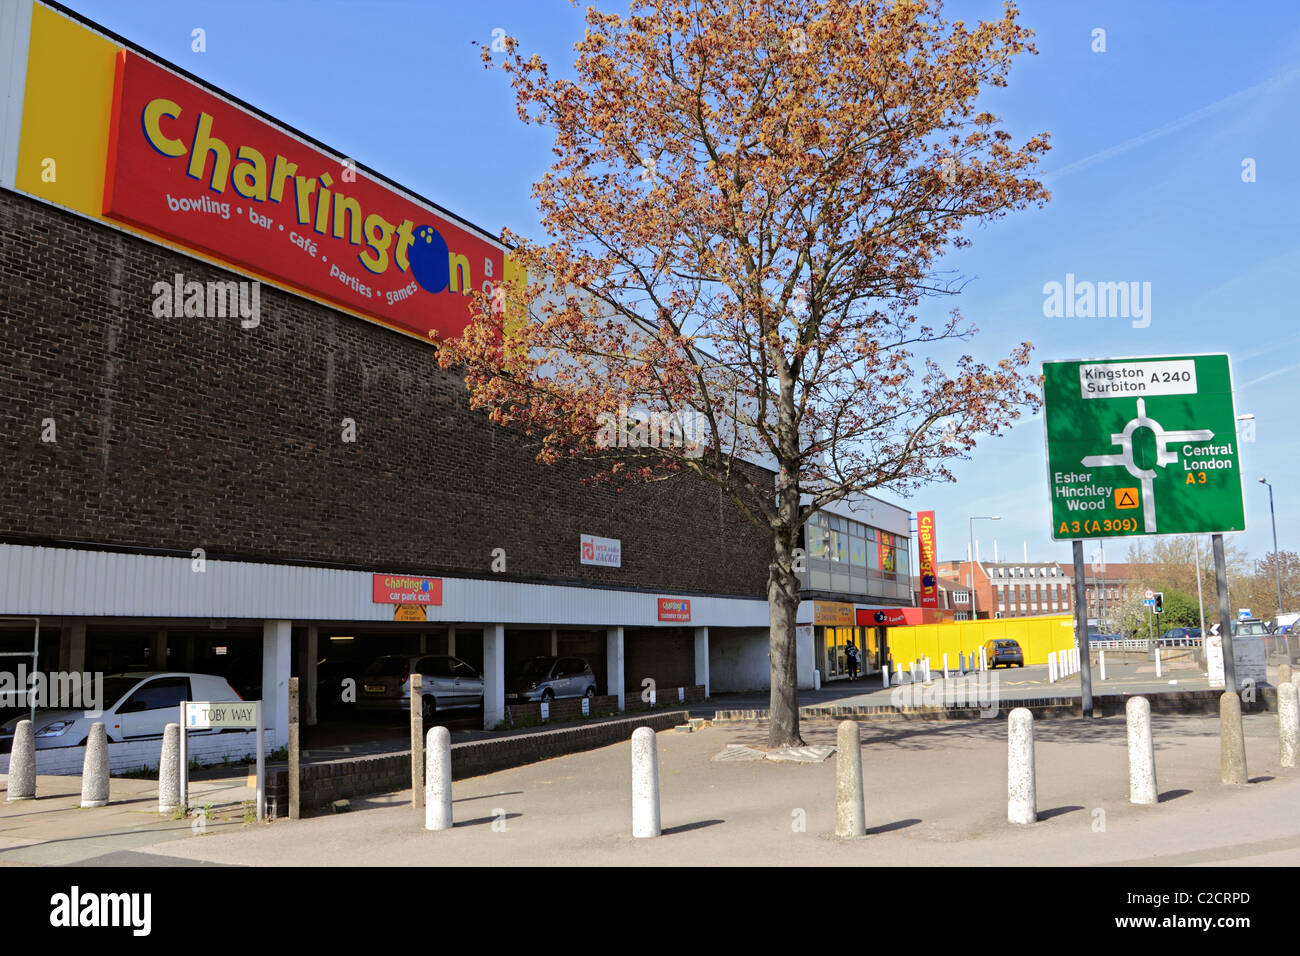 Charrington Bowl 32 lane, 10 pin bowling alley Tolworth, Surbiton, England, UK Stock Photo